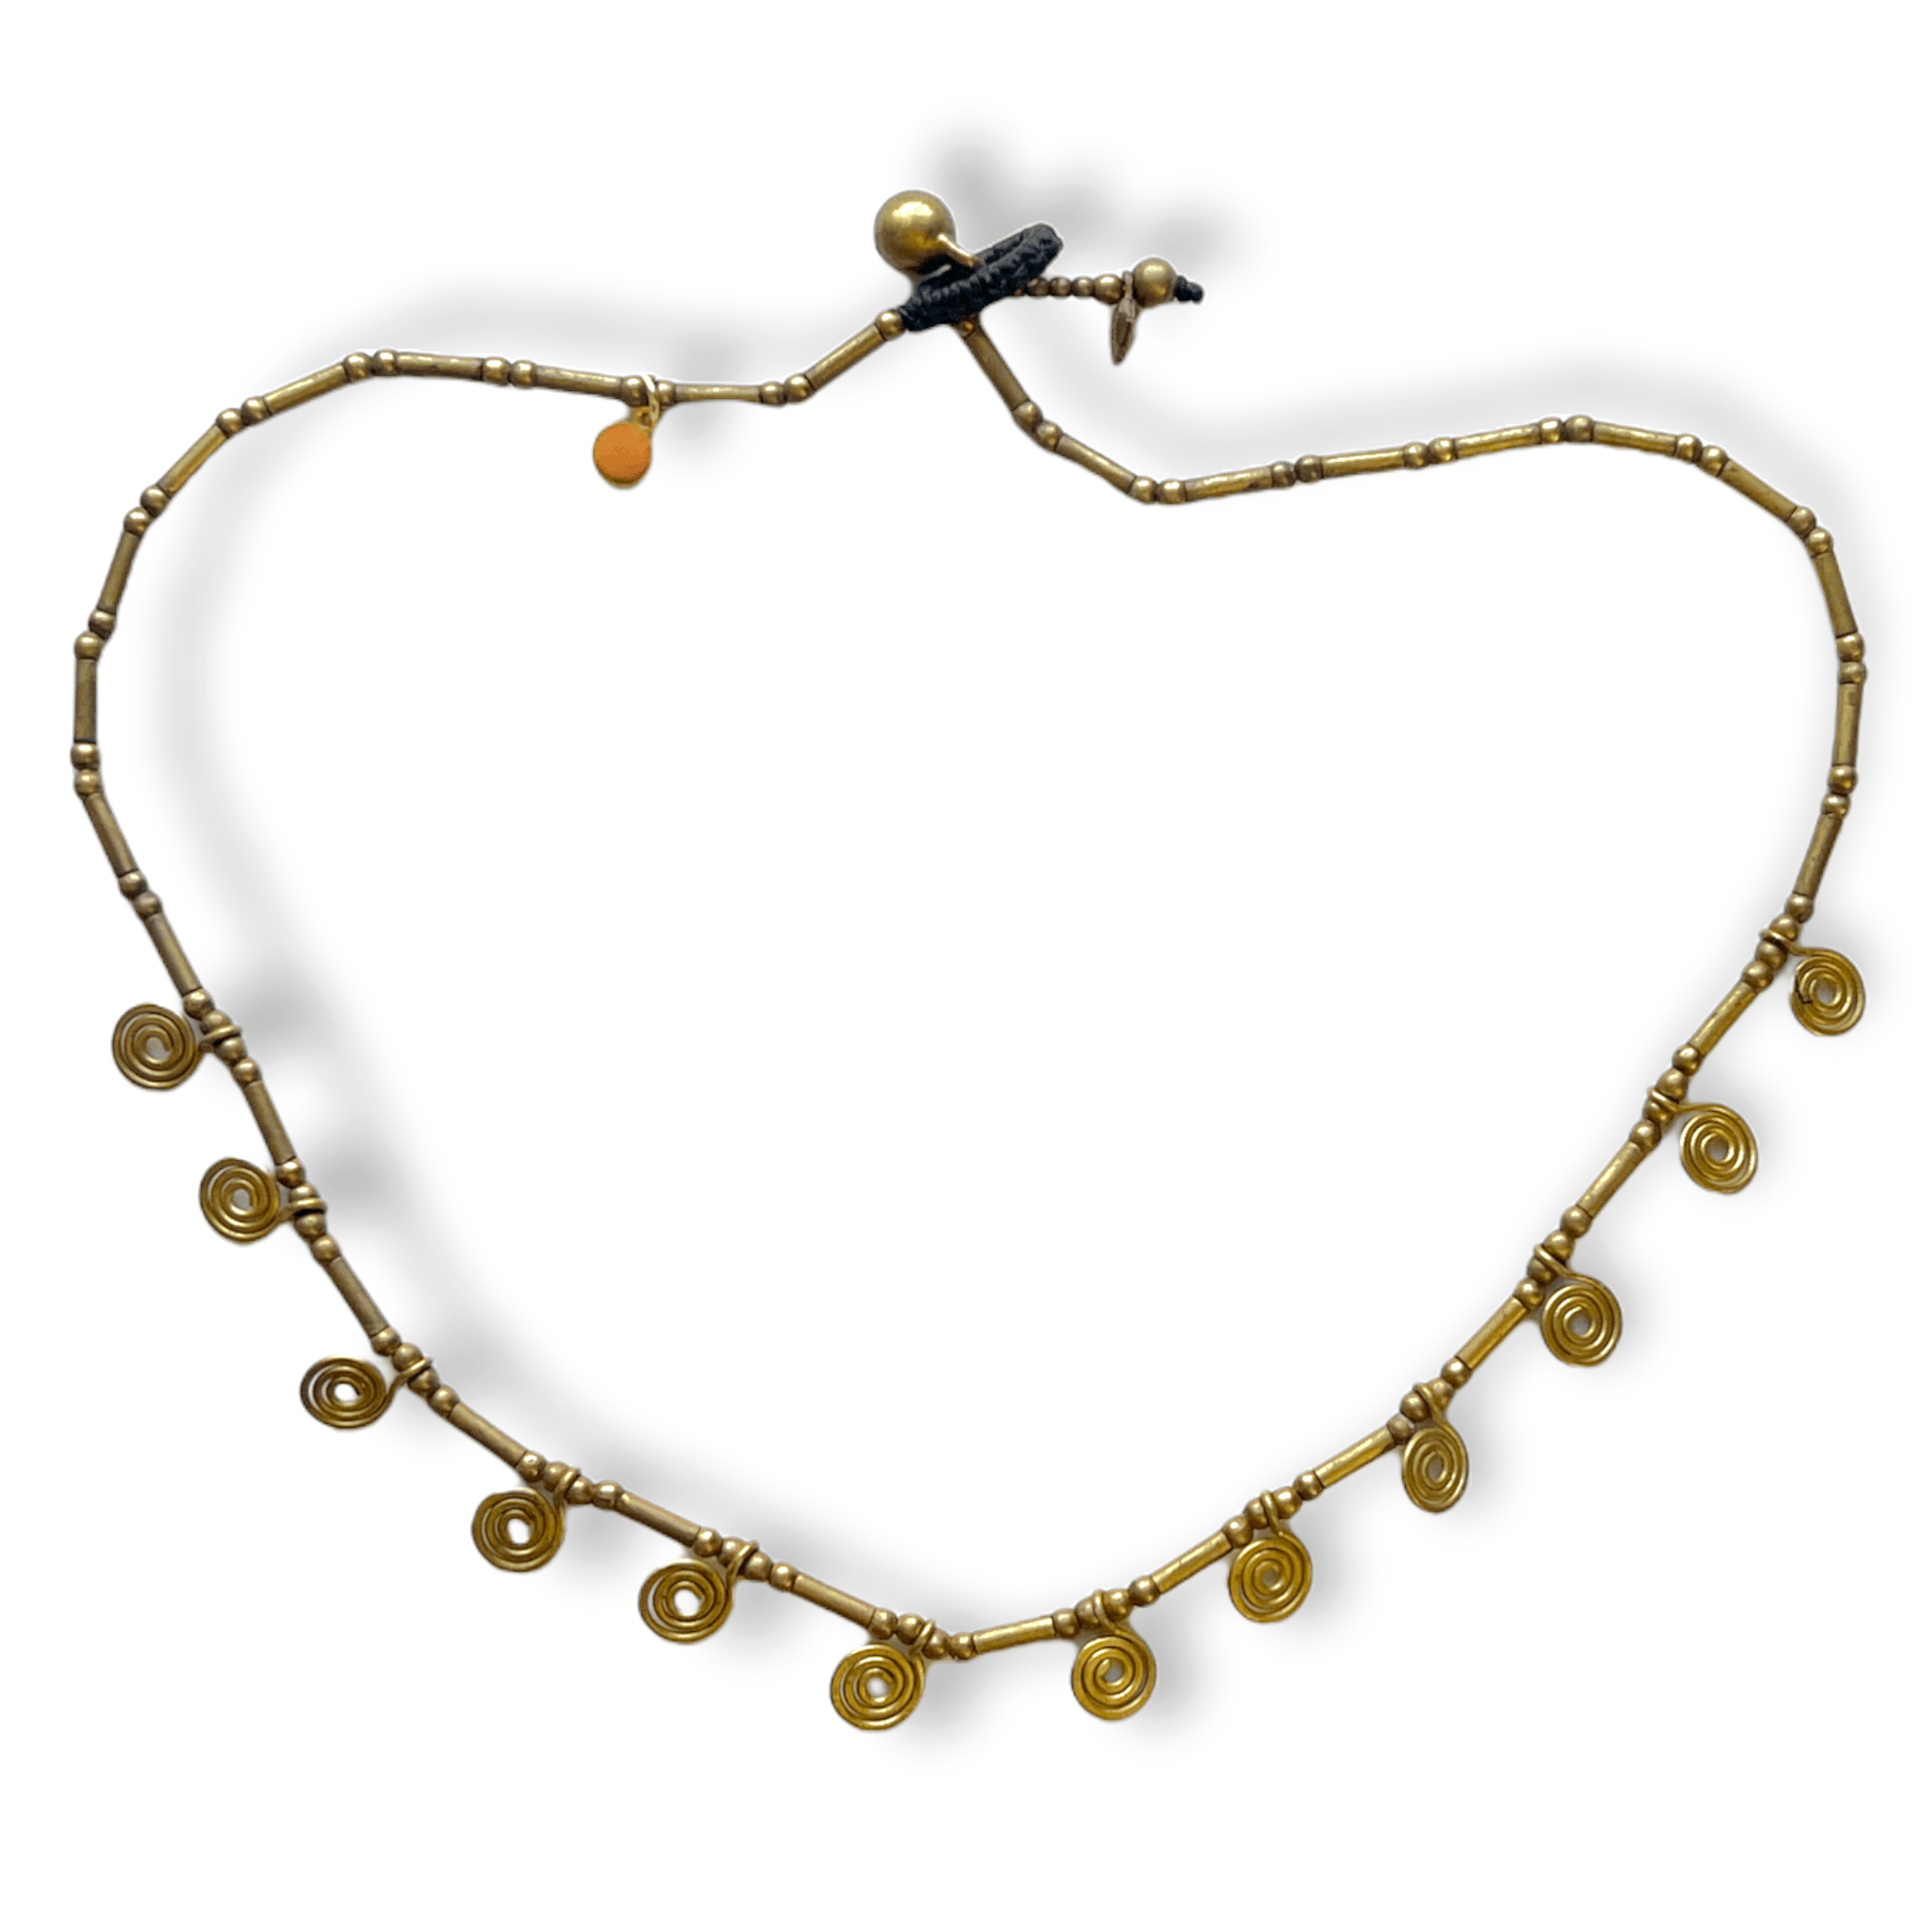 Tribal swirl pattern brass choker necklace - Sundara Joon